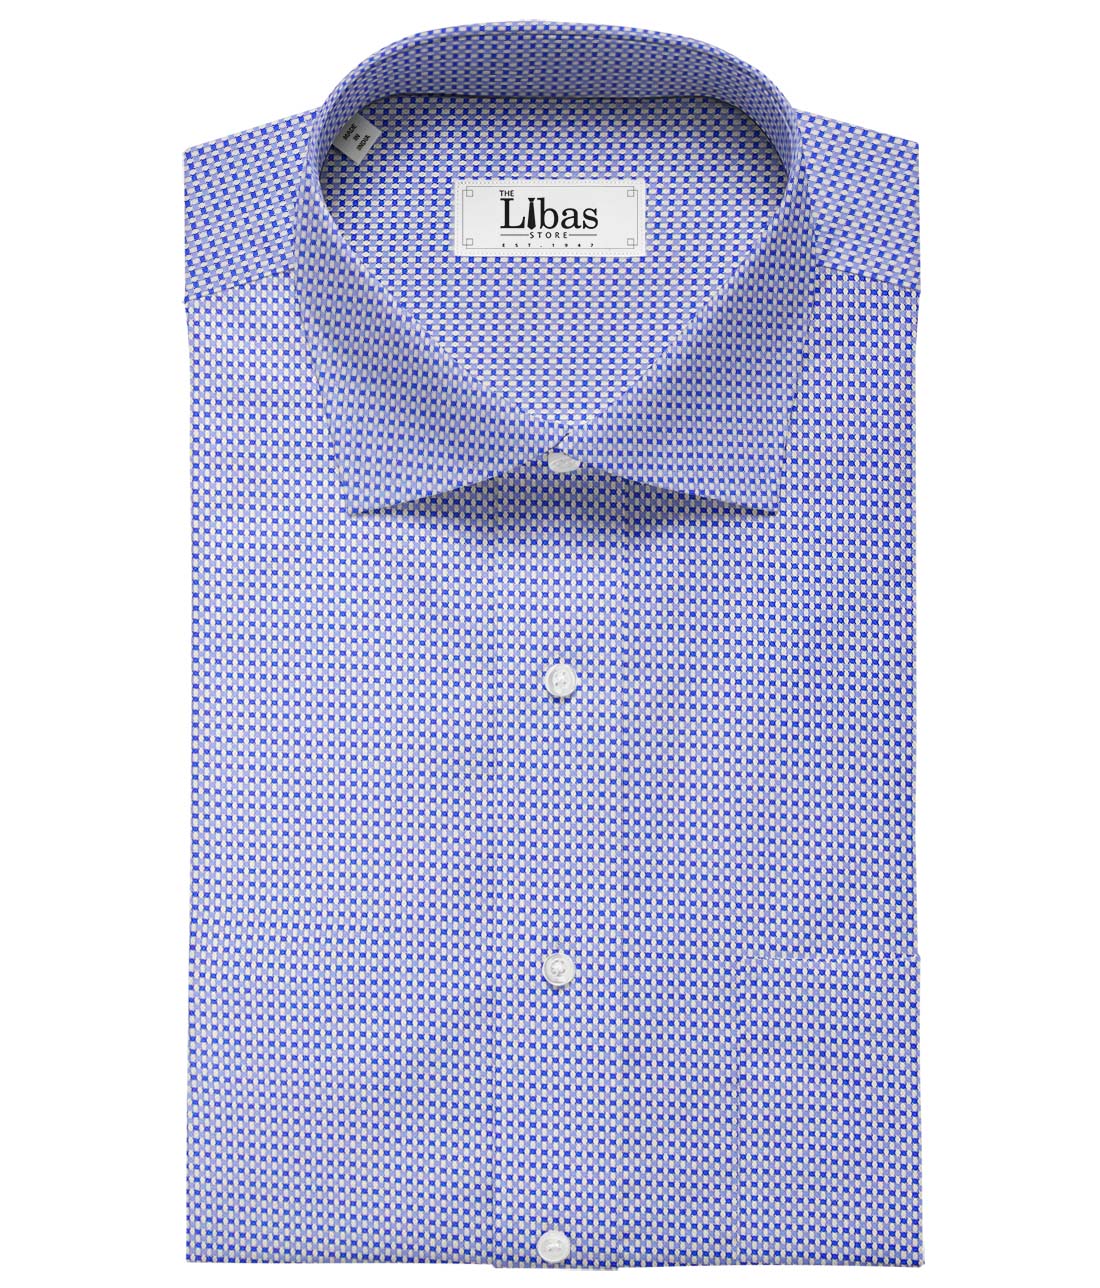 Monza White & Blue 100% Premium Cotton Oxford Weave Shirt Fabric (1.60 M)